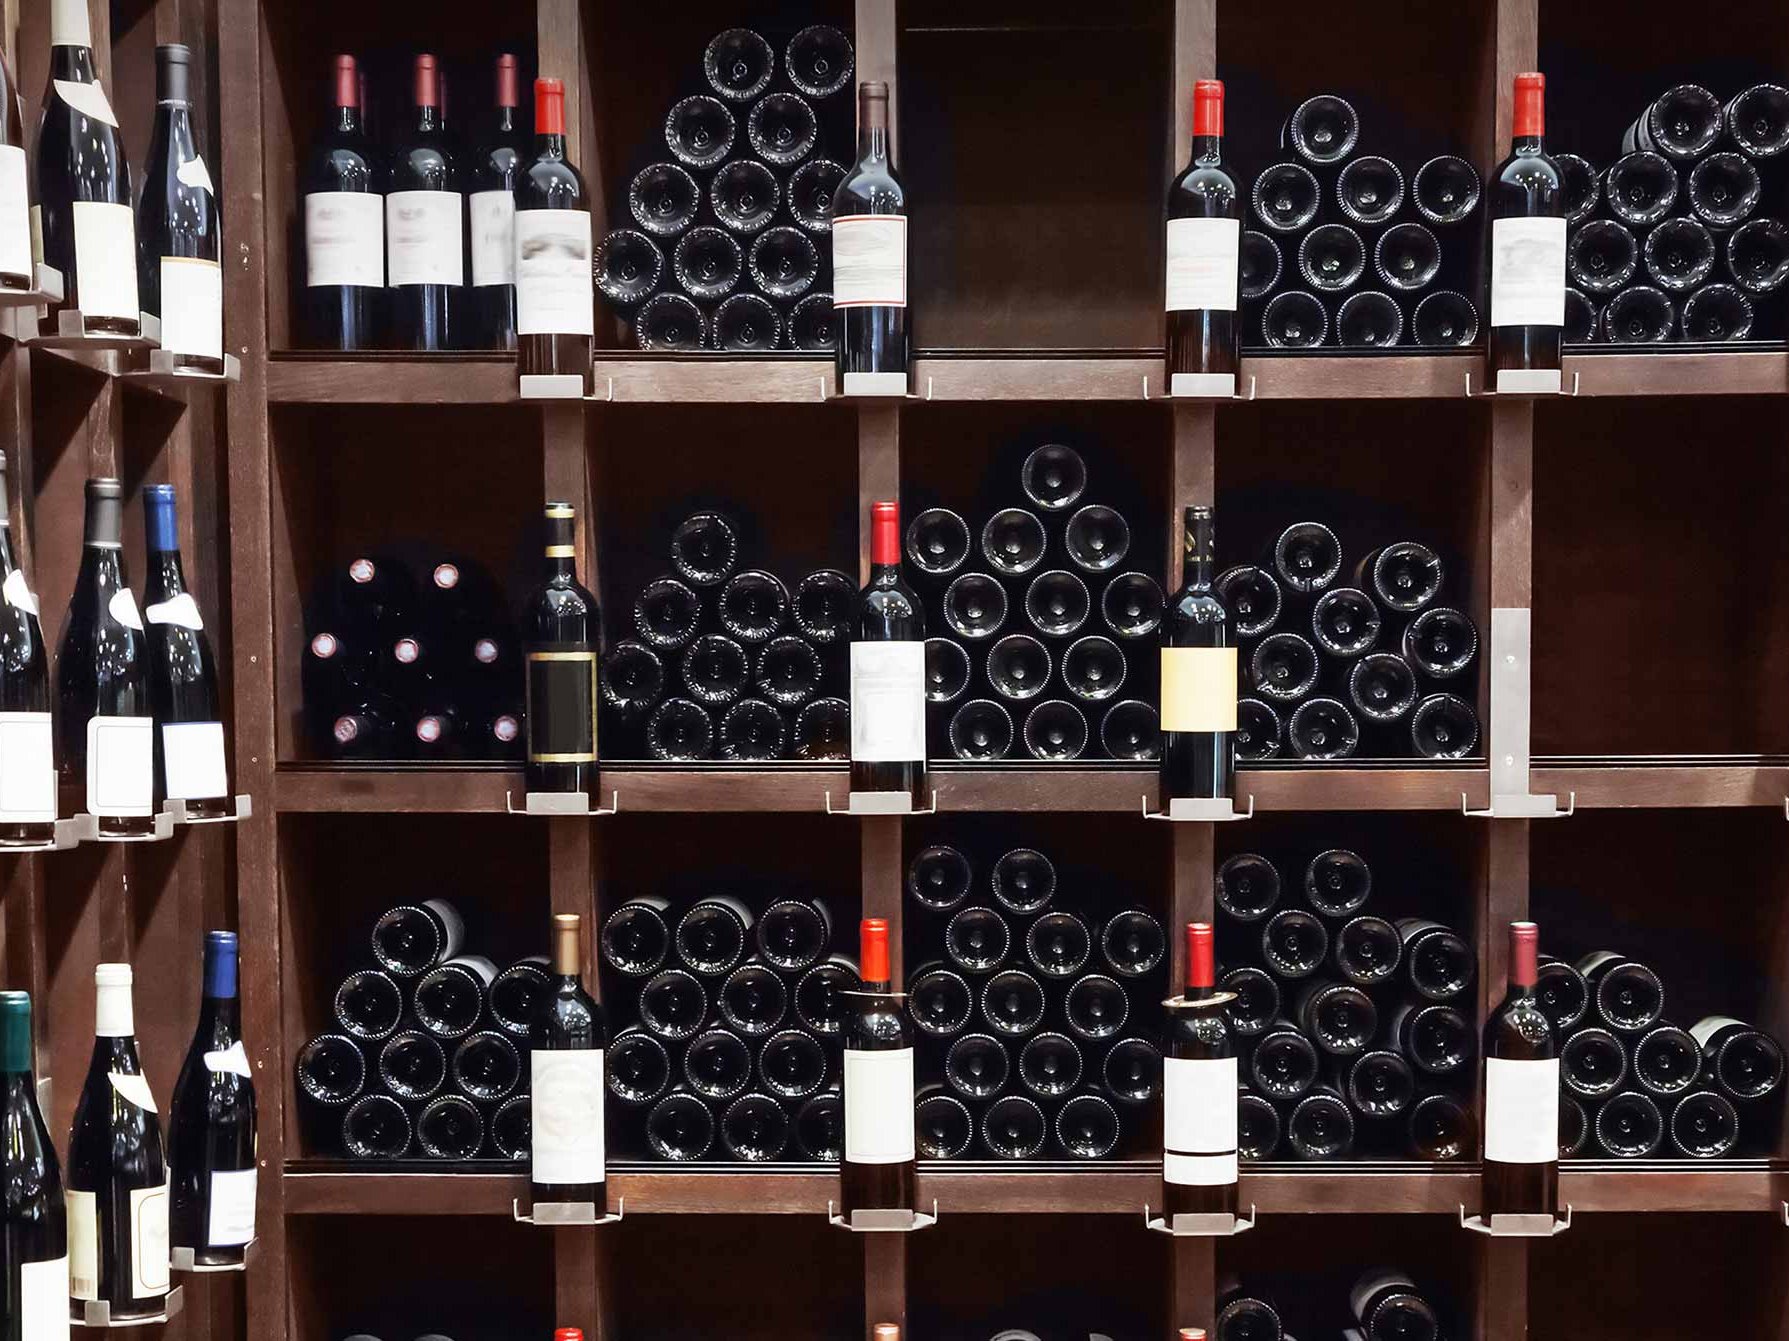 The price of wine sold in Ireland has risen.